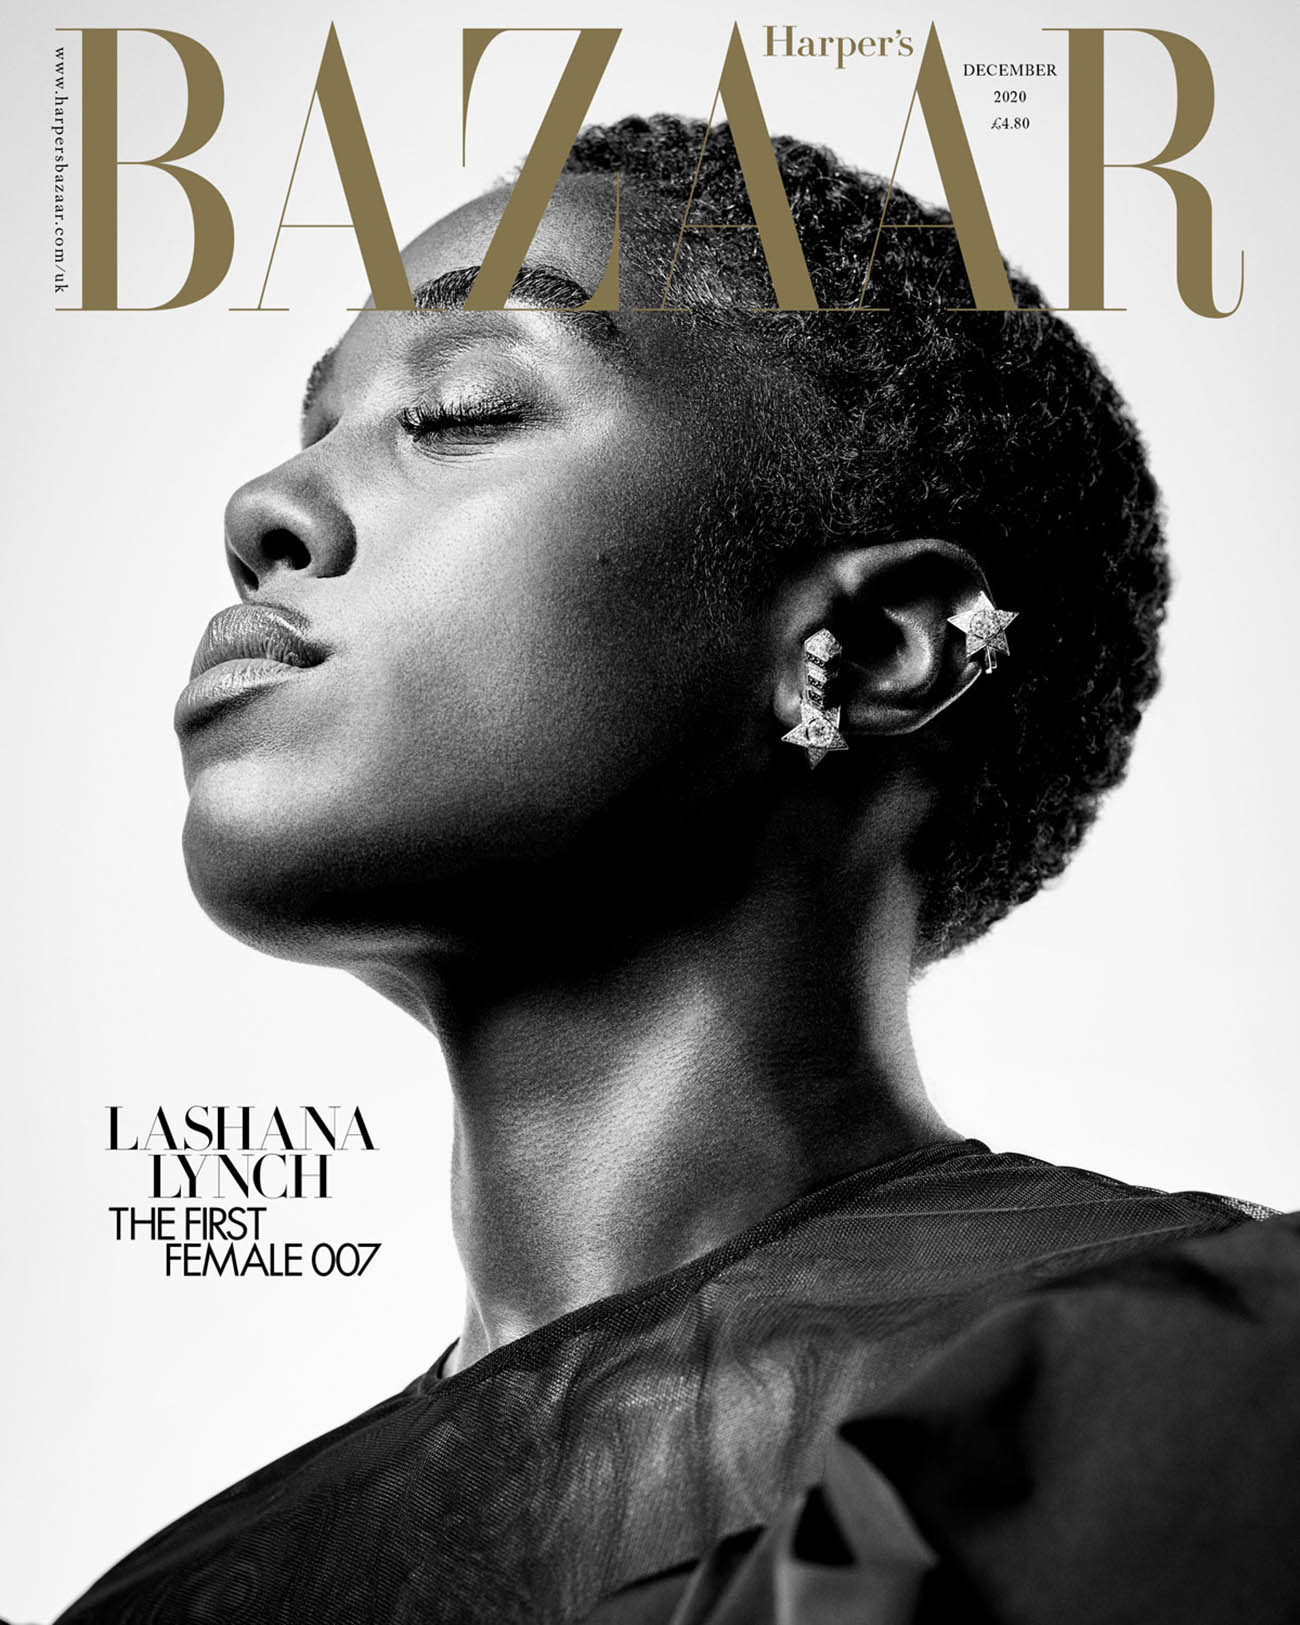 Lashana Lynch covers Harper’s Bazaar UK December 2020 by Richard Phibbs